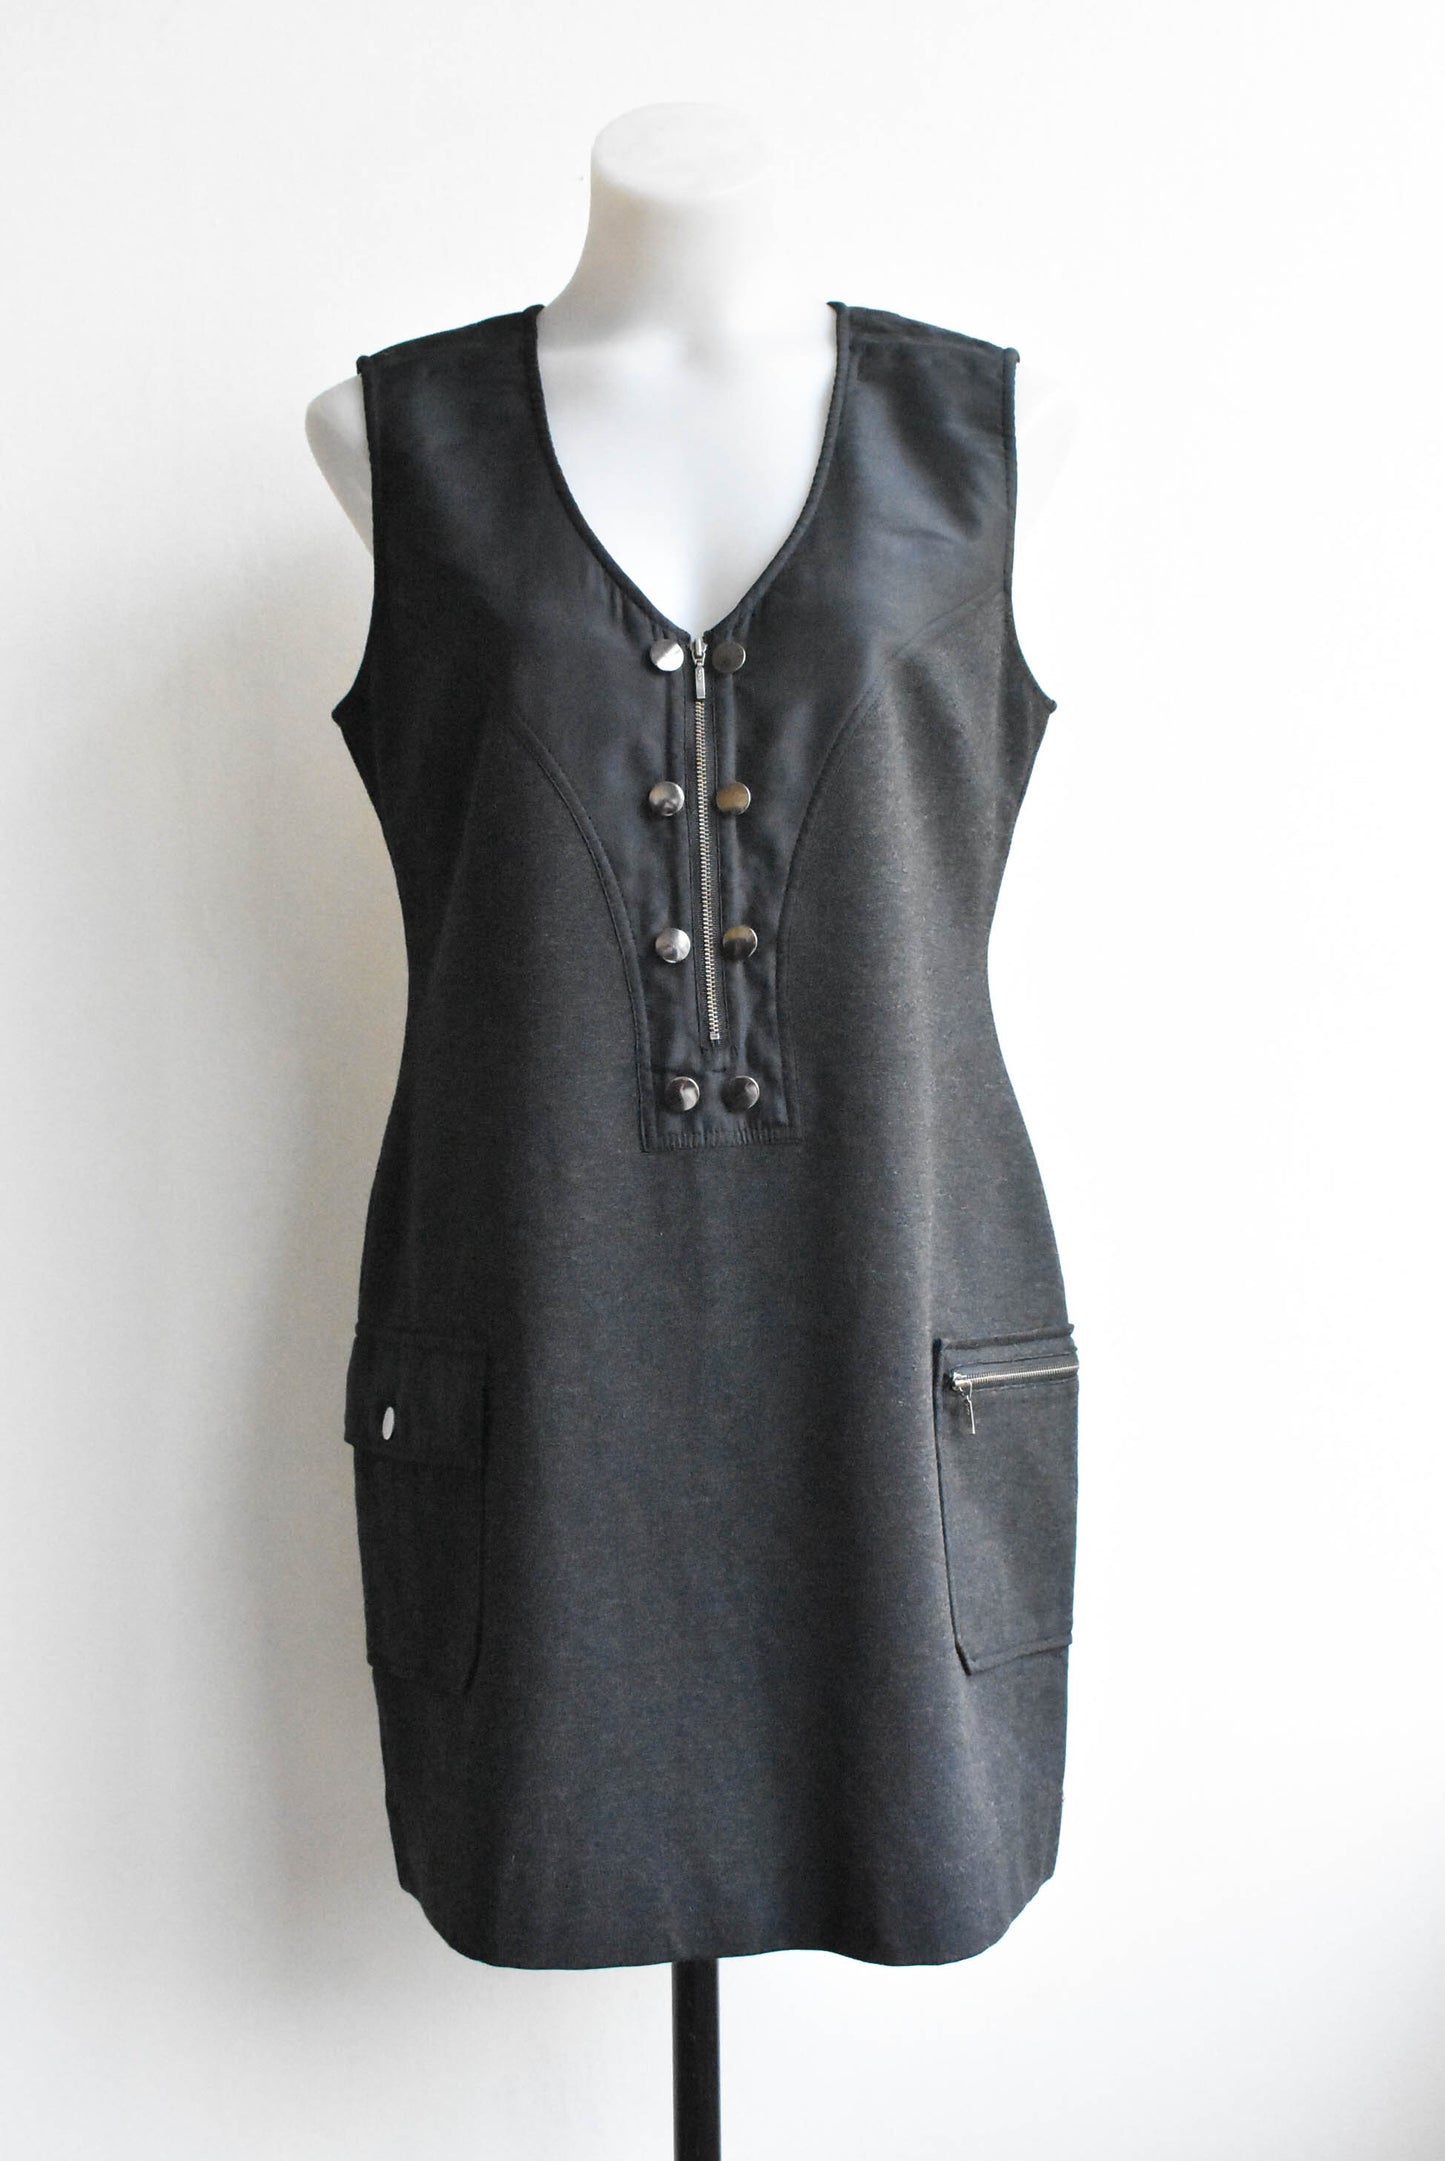 Vargo black sleeveless dress, size 14